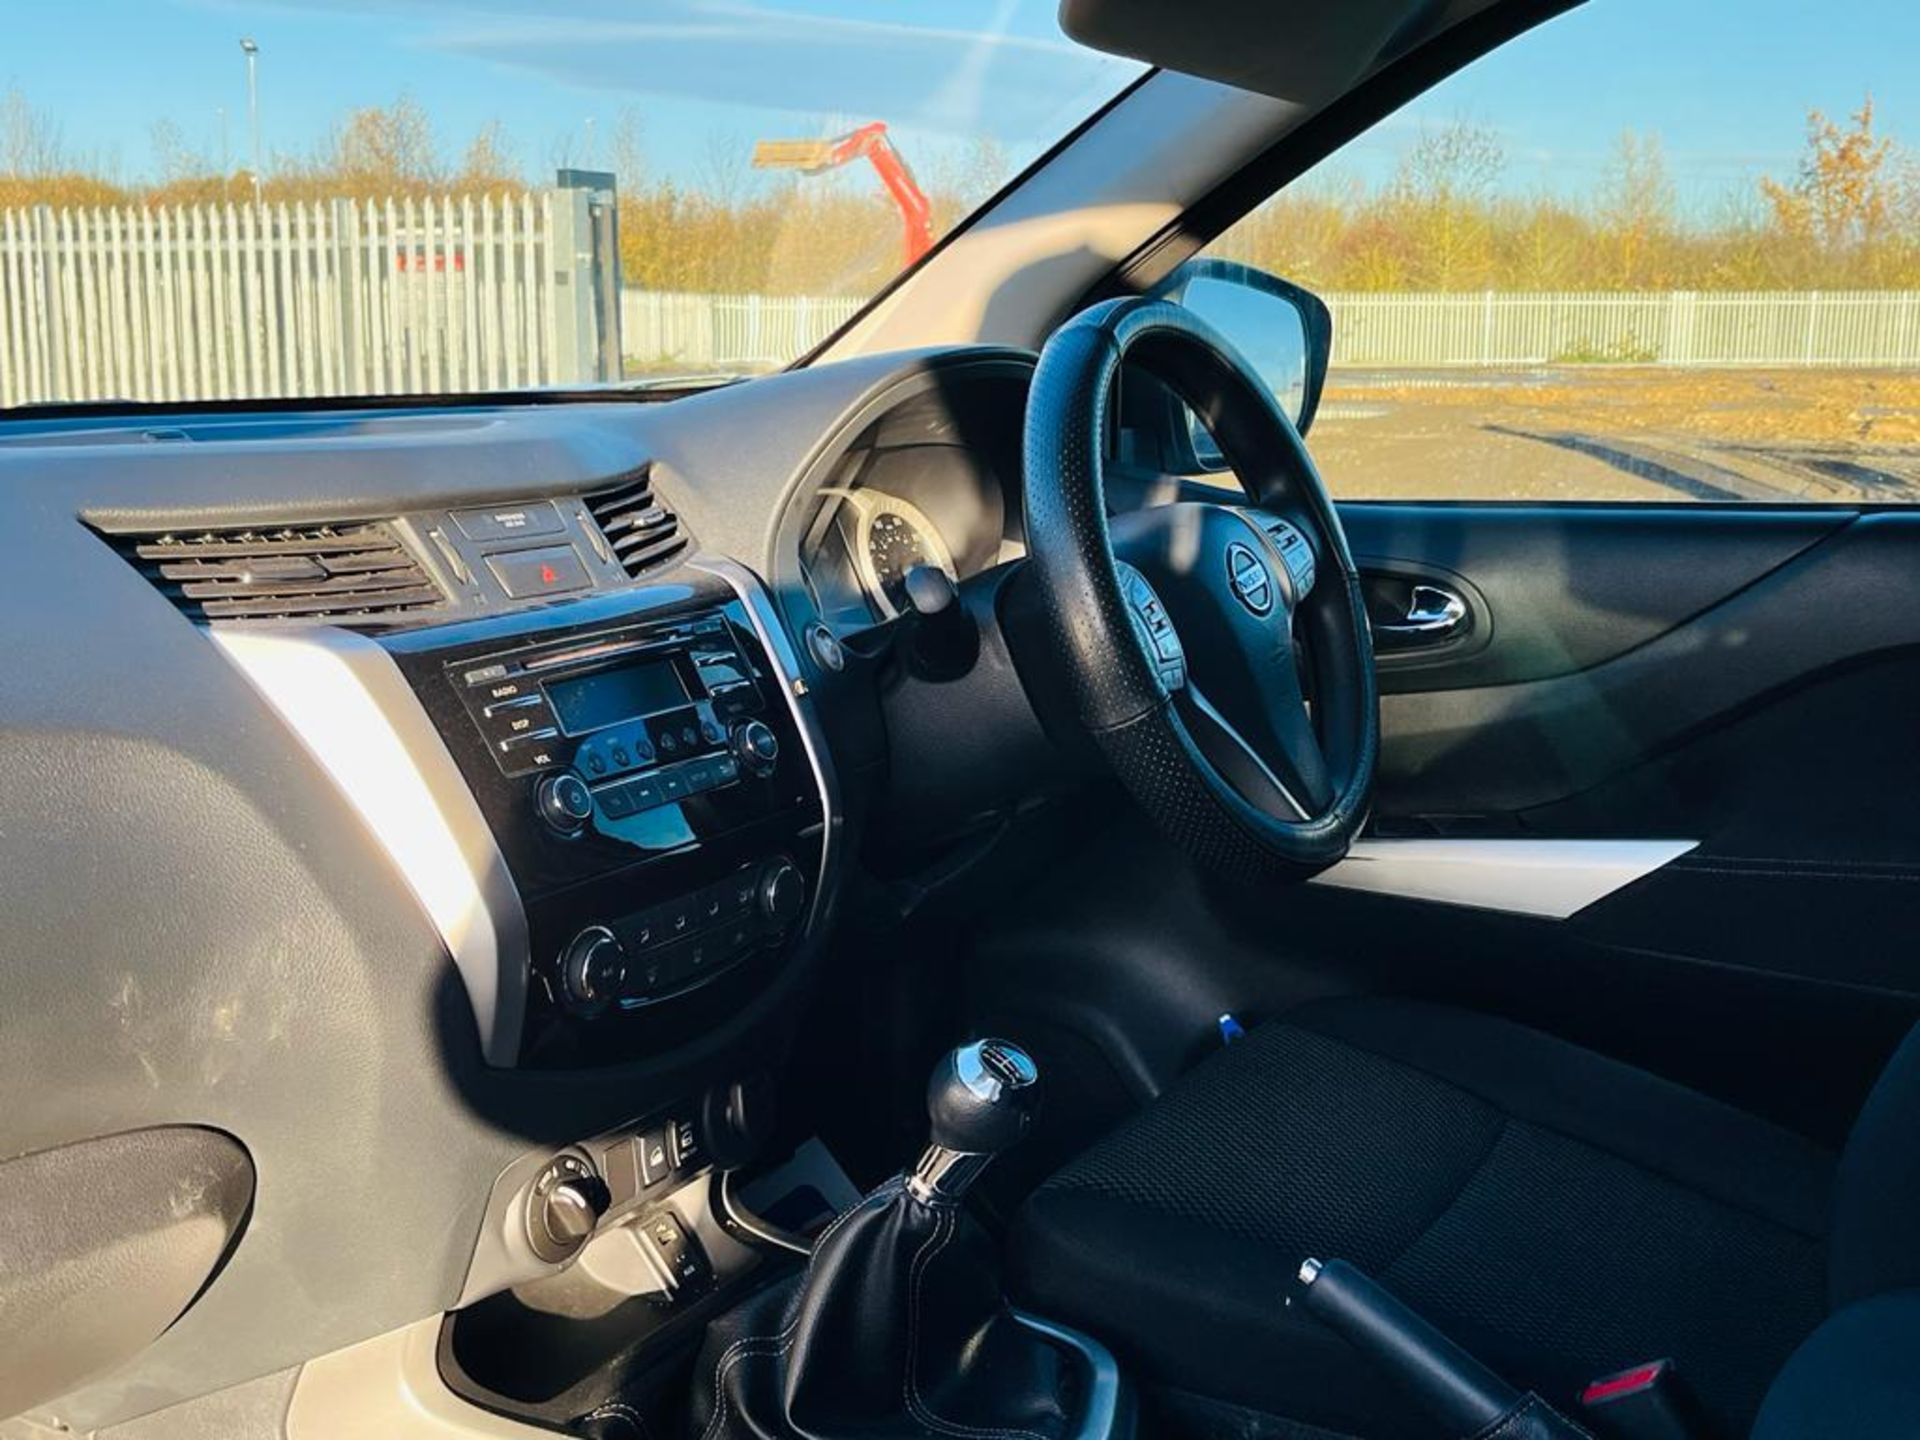 Nissan Navara 2.3 DCI 163 Acenta CrewCab 4WD Pickup 2019 '19 Reg' ULEZ Compliant - Image 23 of 33